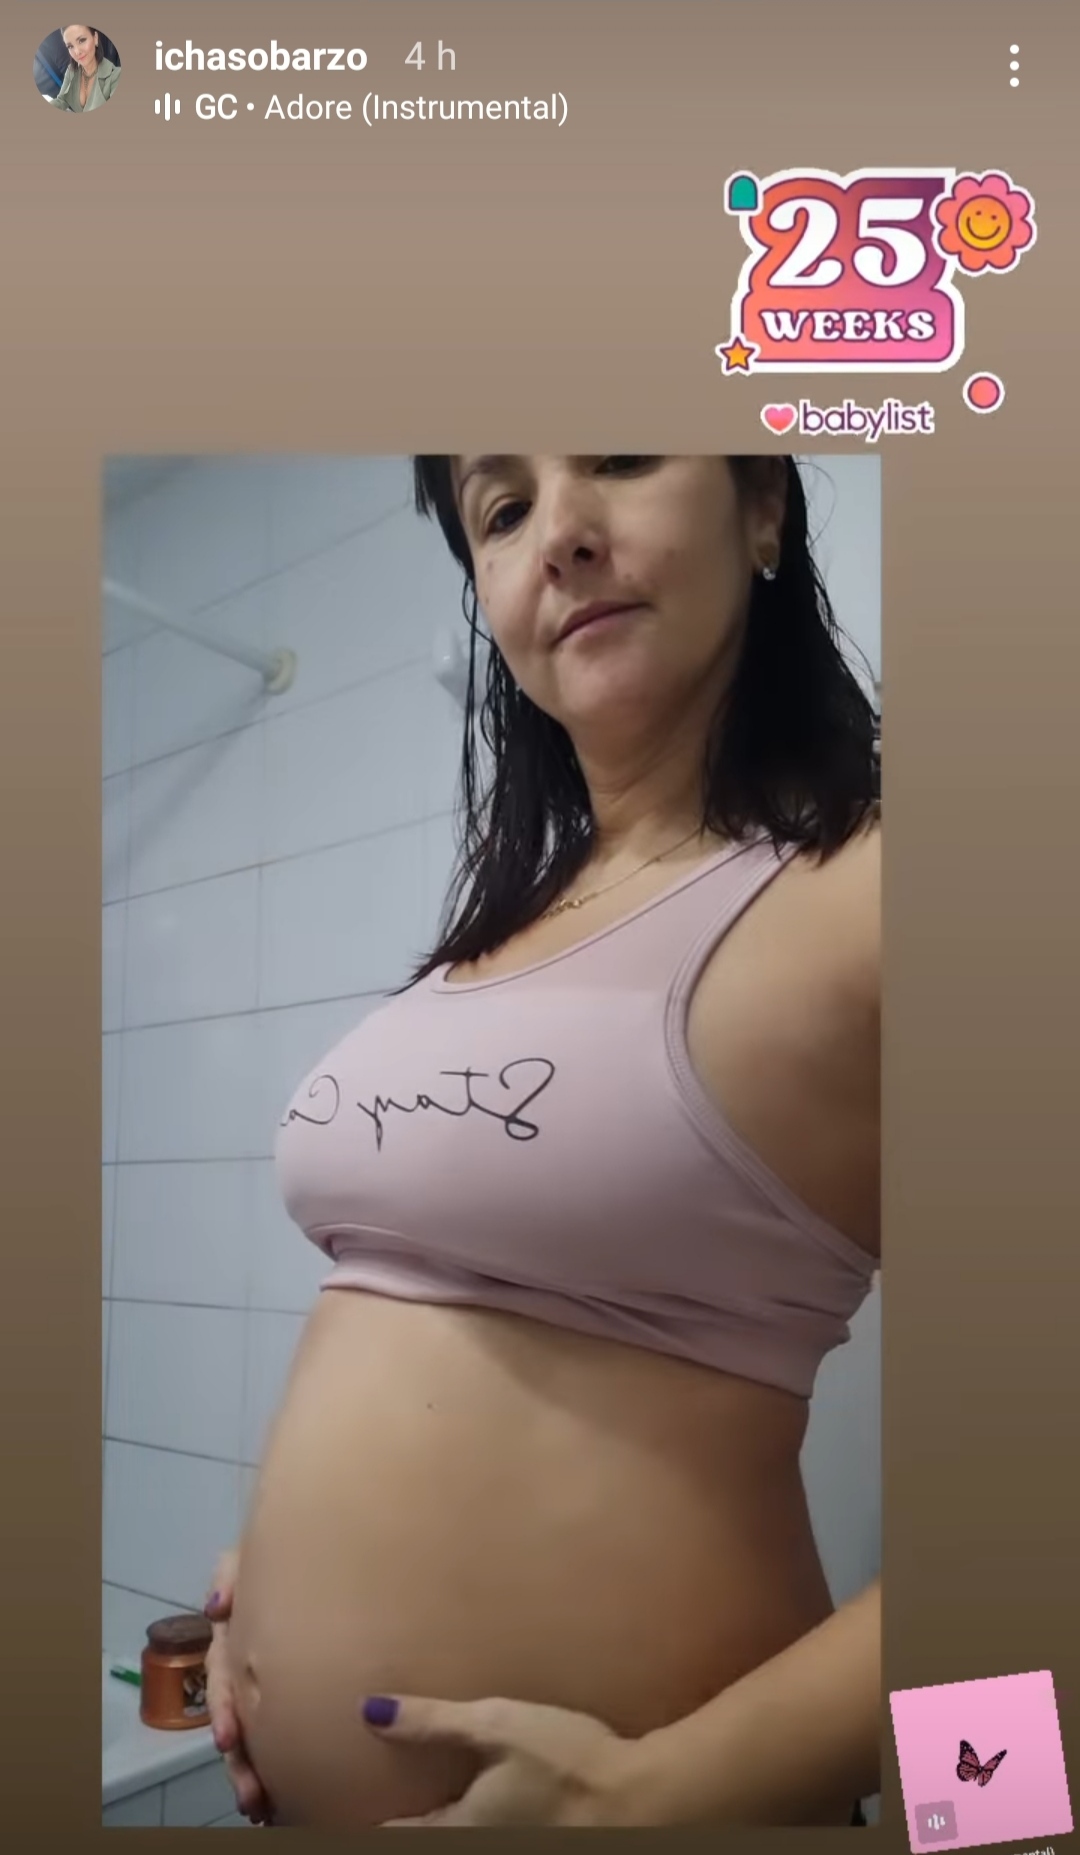 Icha Sobarzo embarazo